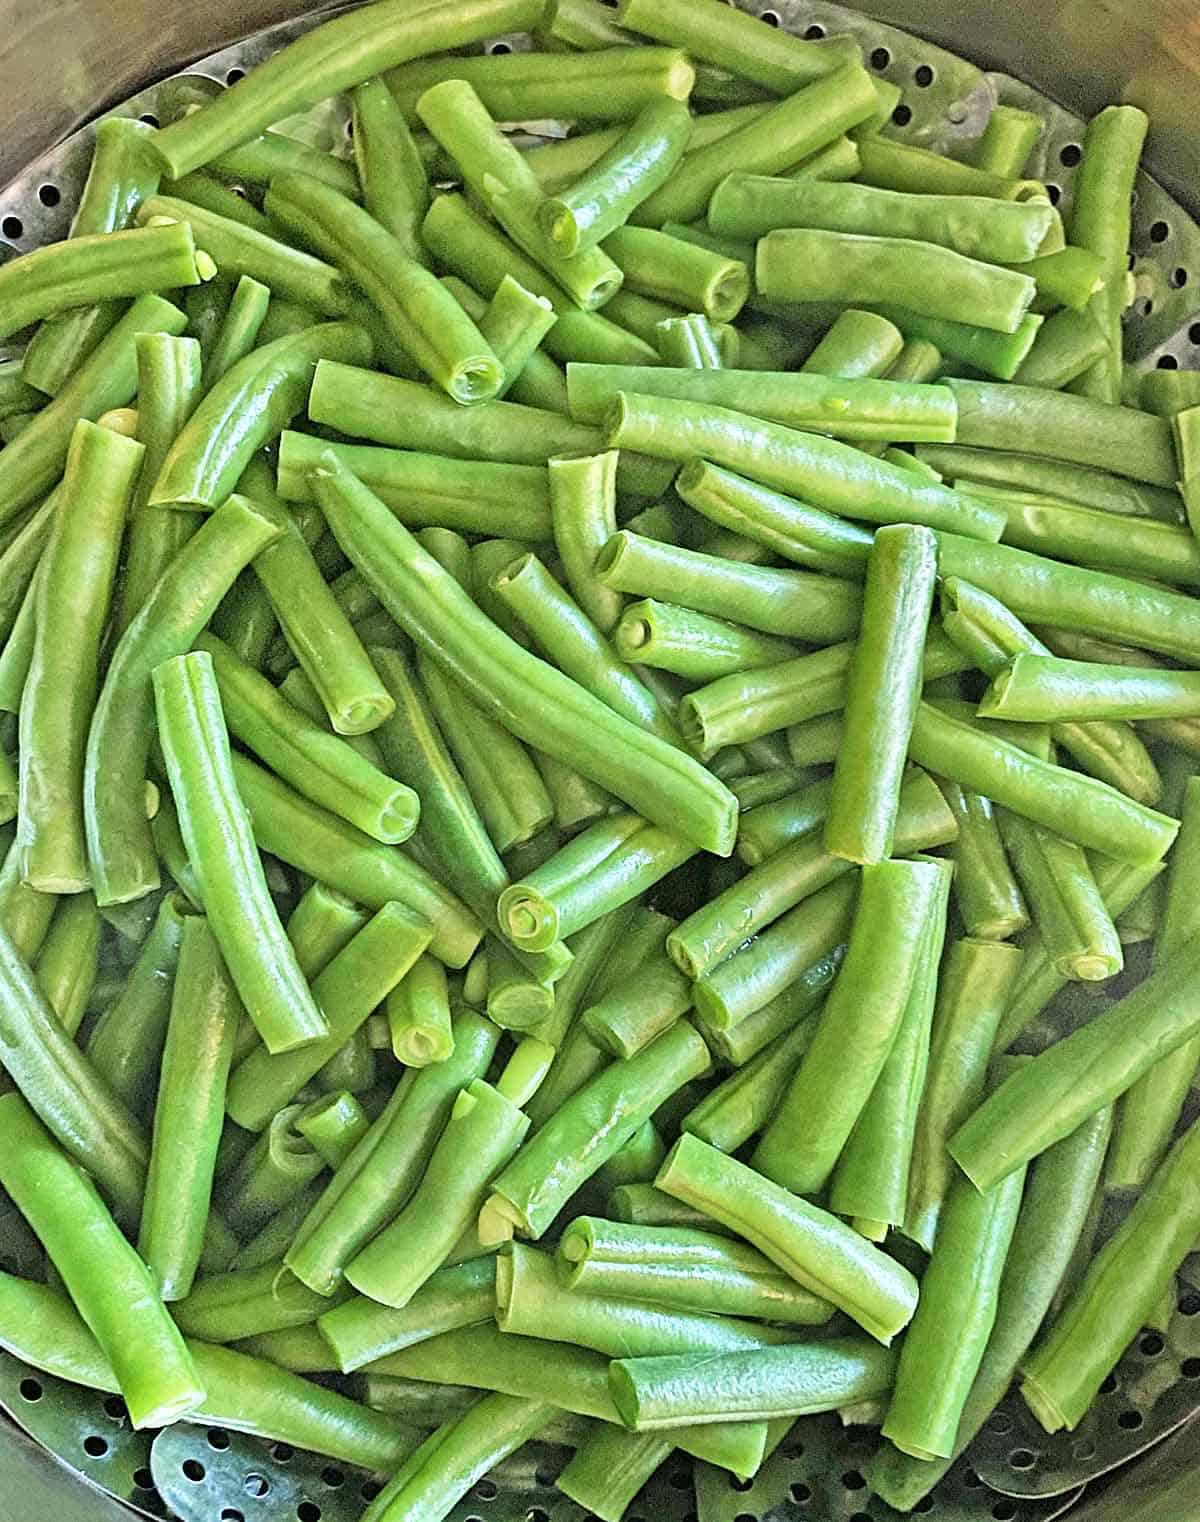 Steamed green beans in a silver steamer basket.